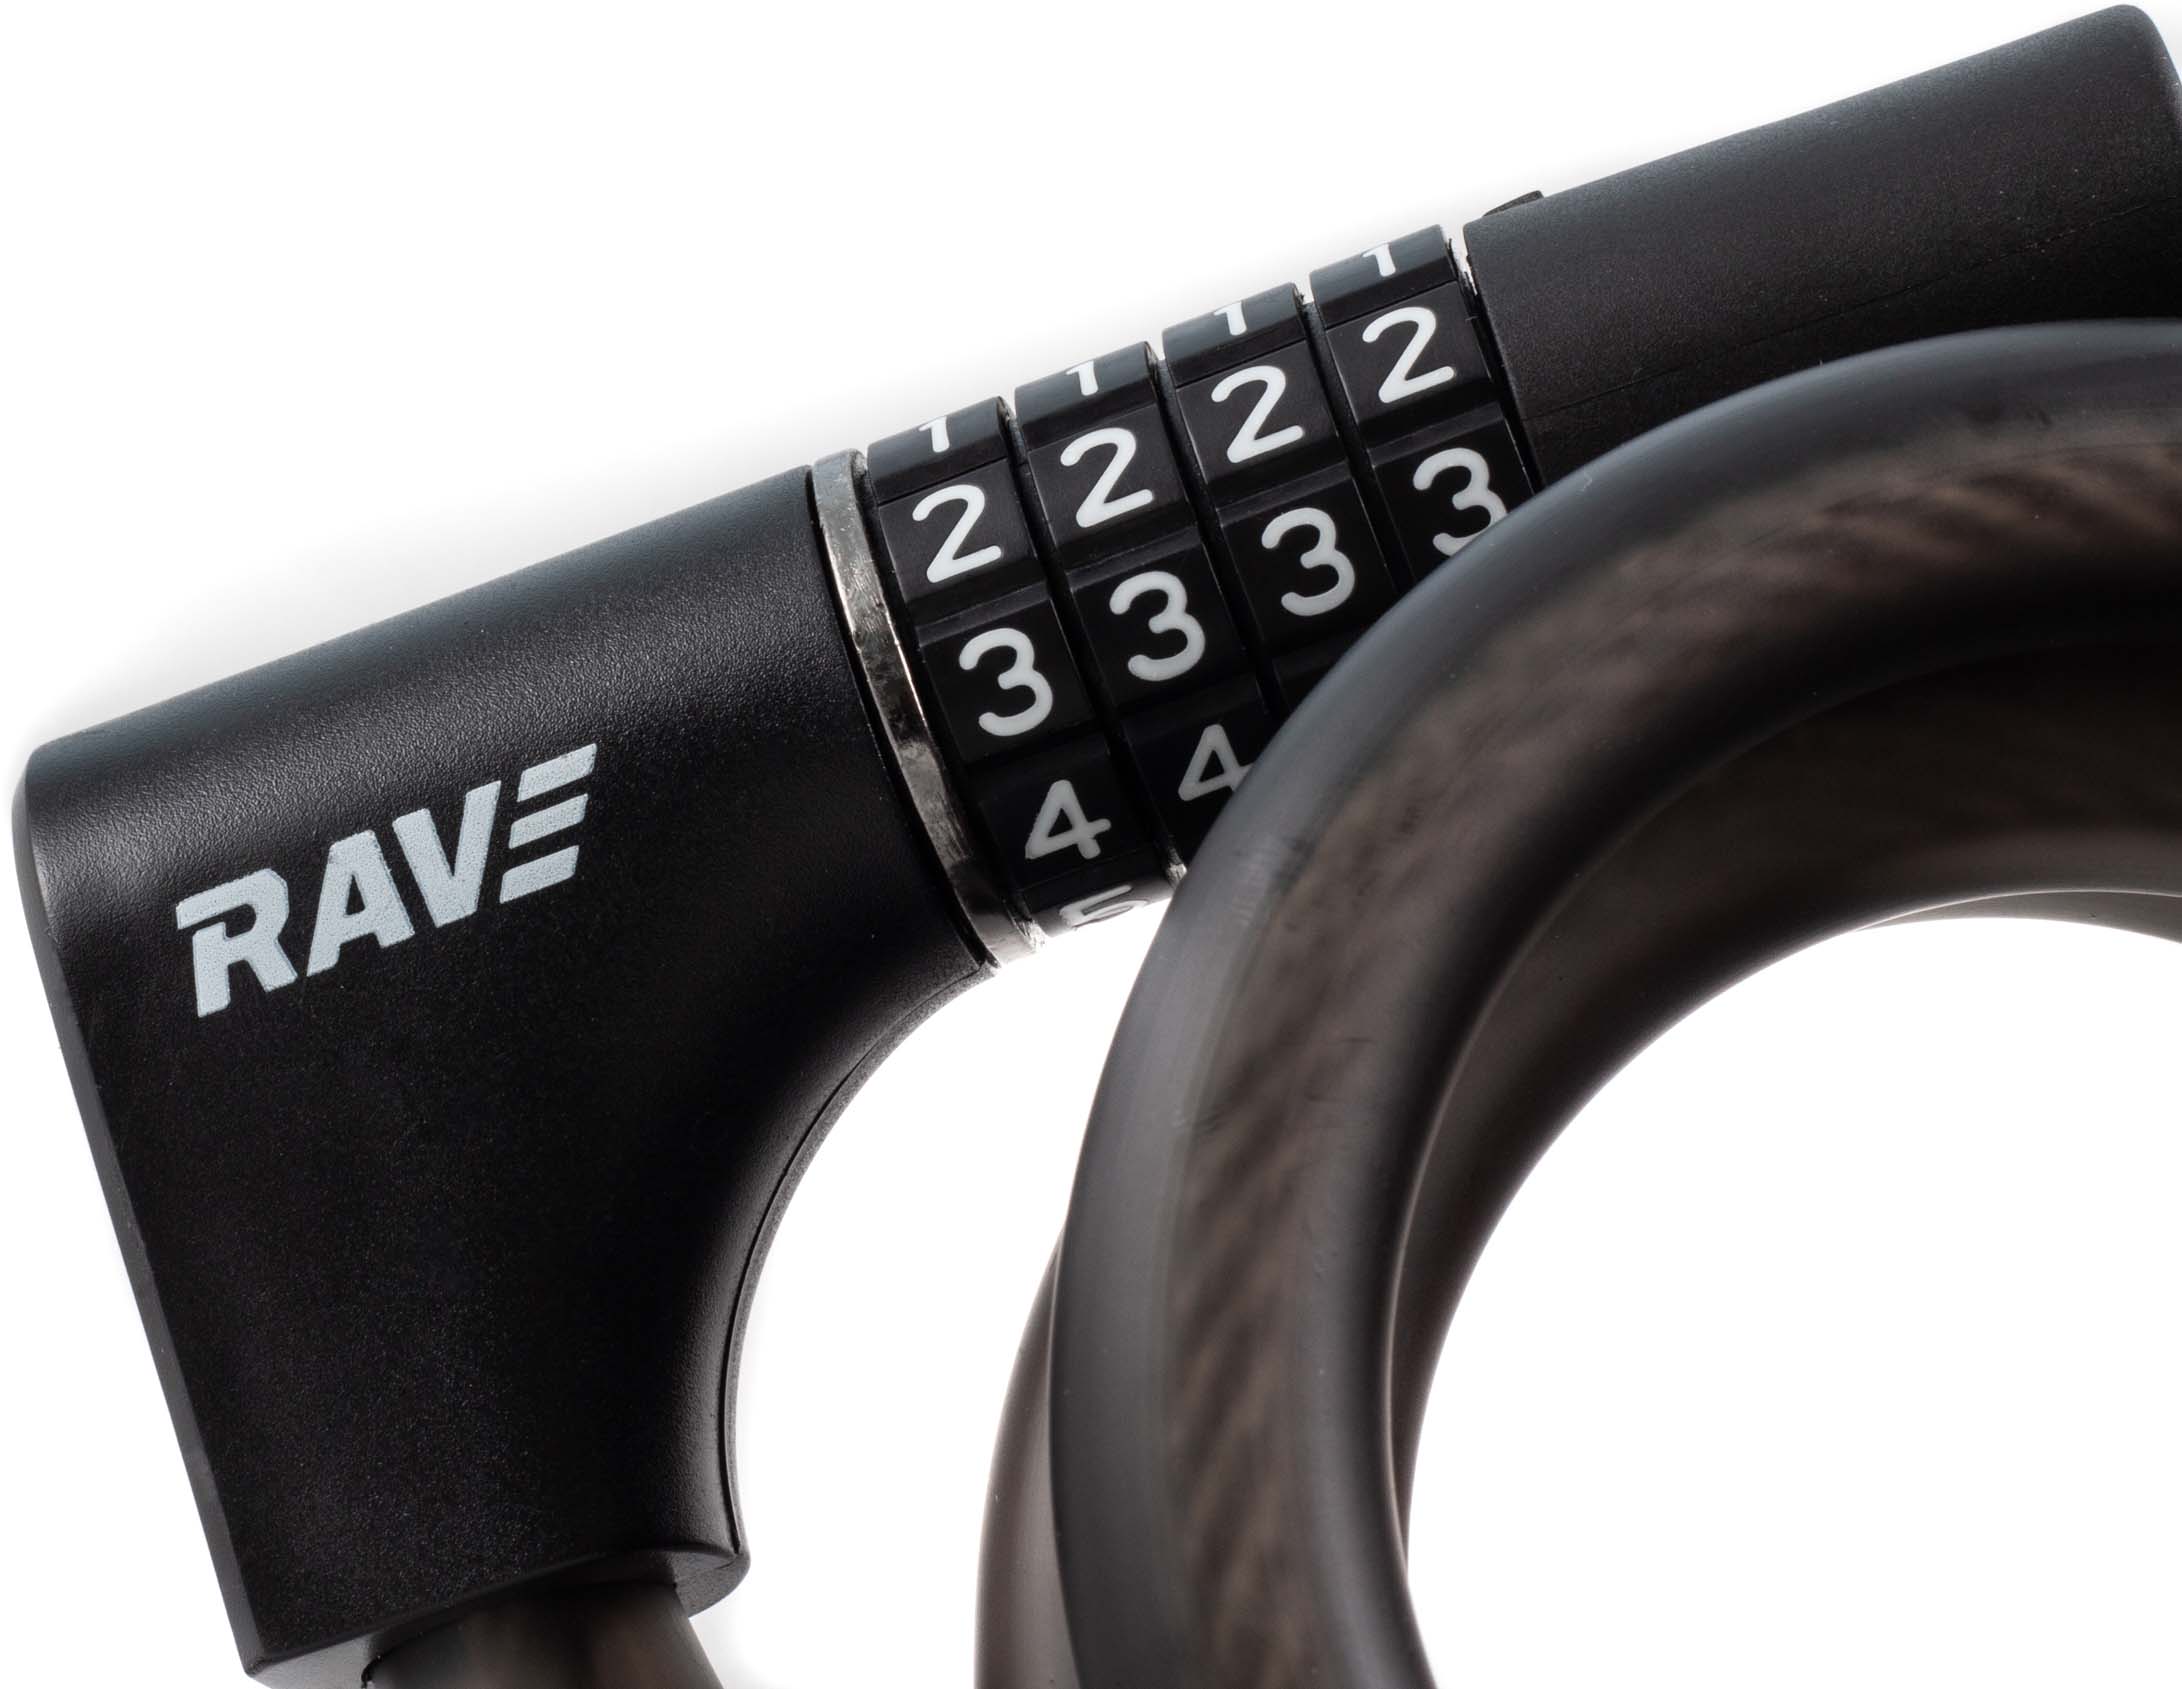 rave spiral lock 2 in 1 pro 5 - combination lock incl. 2 keys - 120 cm / 15 mm